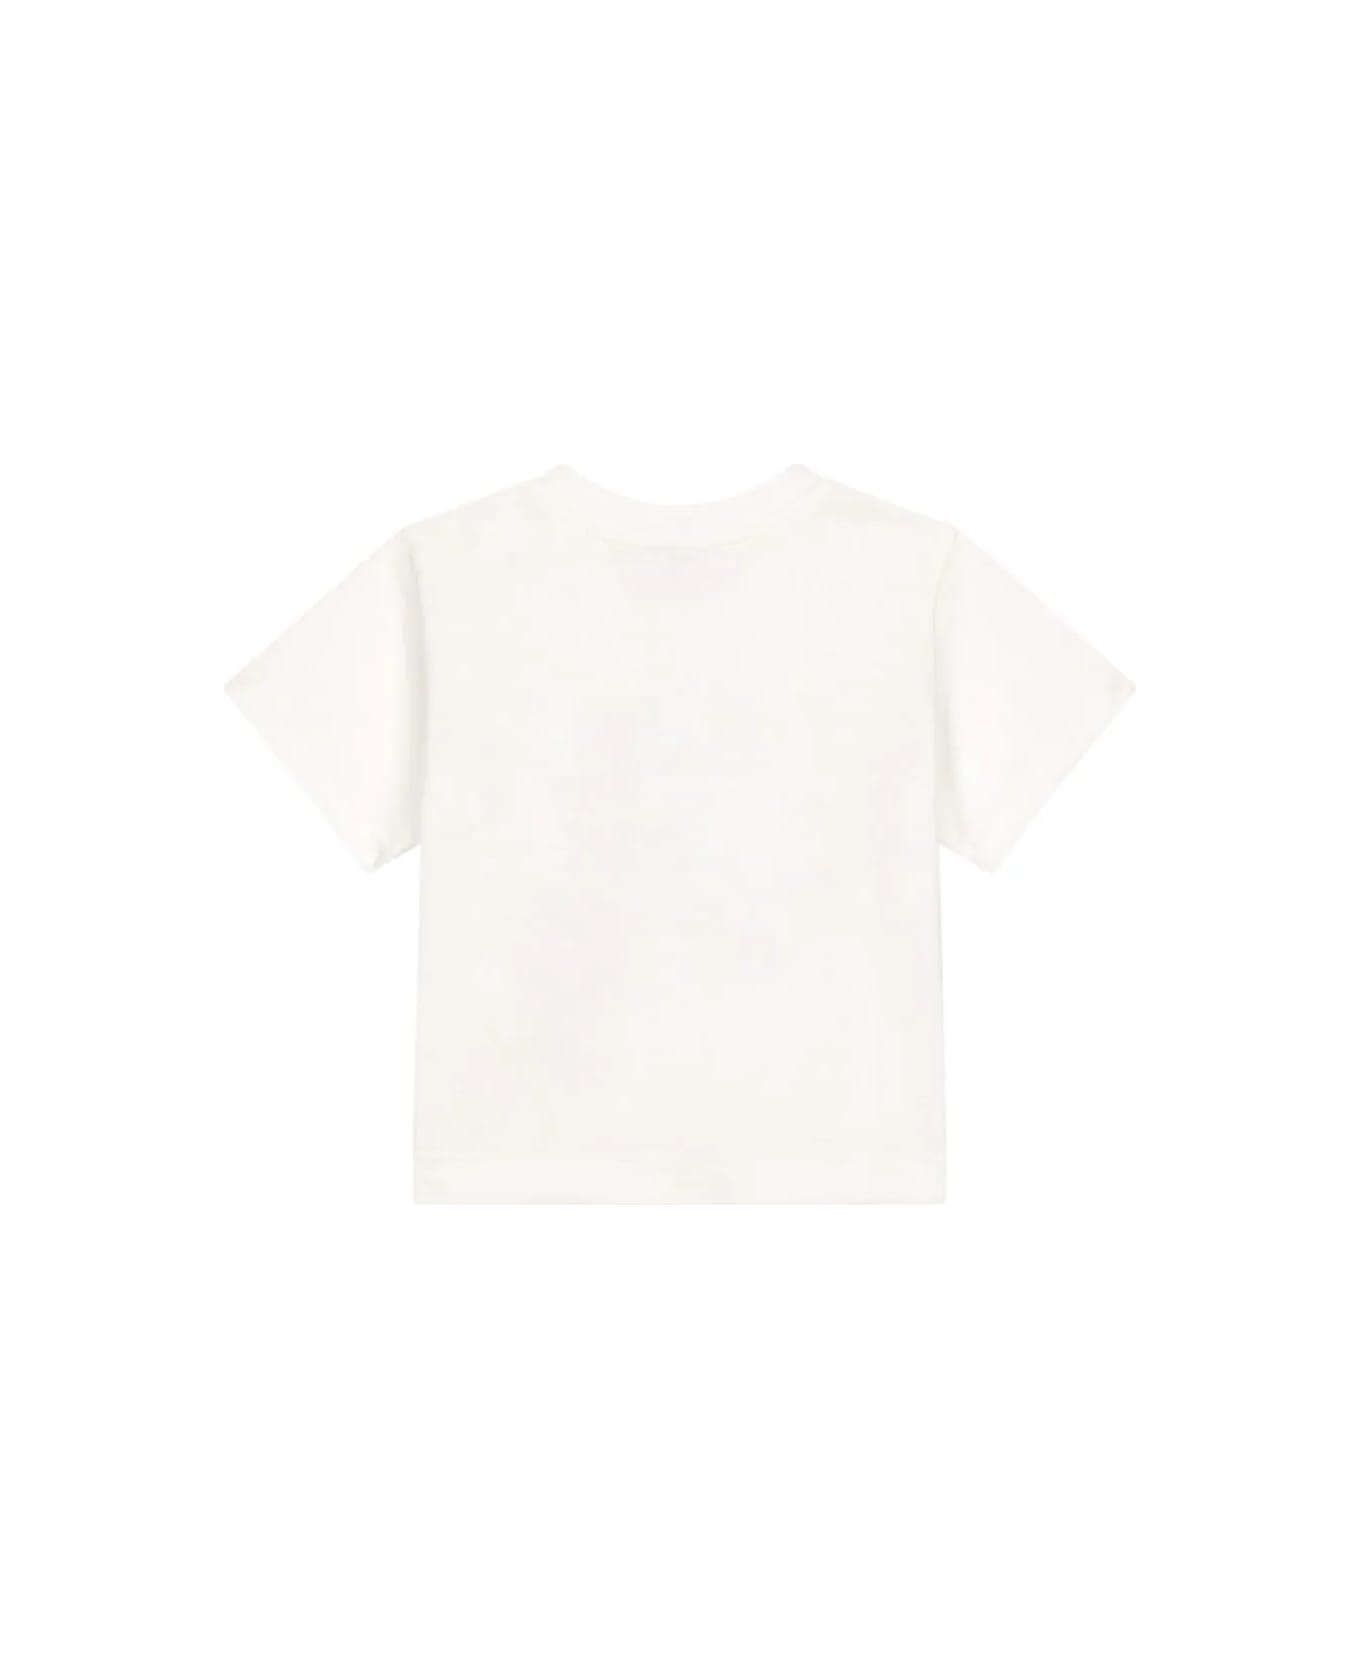 Dolce & Gabbana White T-shirt With Rubberized Logo Print - White